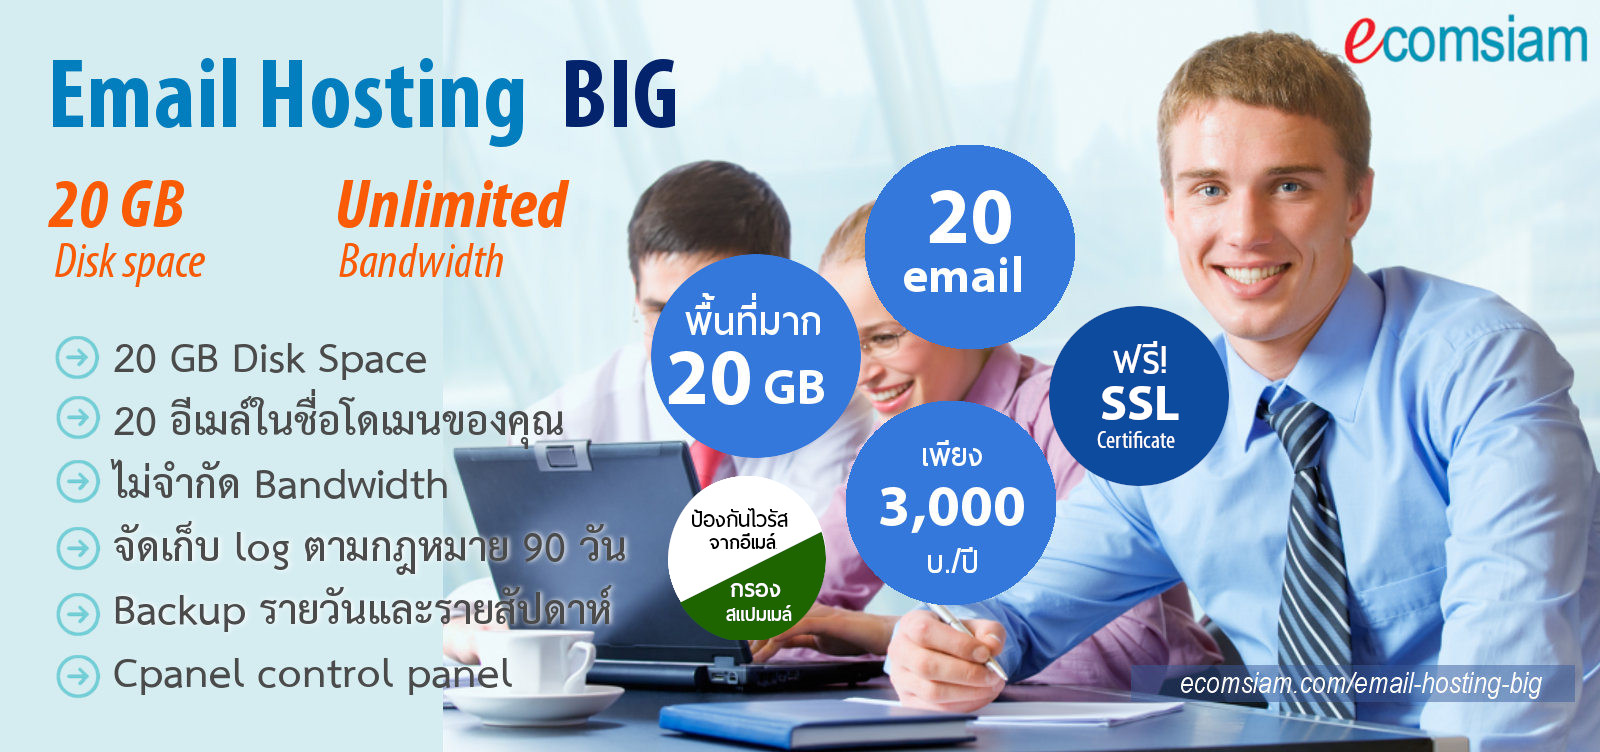 email hosting thai : BIG Data บริการอีเมล์คุณภาพสูง สำหรับองค์กร พื้นที่ขนาดใหญ่ มีความปลอดภัยในการใช้งาน ราคาคุ้มสุดๆ ราคาไม่แพง เว็บโฮสติ้งไทย free SSL Email hosting พื้นที่มากถึง 20GB รายชื่ออีเมล์ 20 email ฟรี SSL เพียง 3000 บาทต่อปี ....